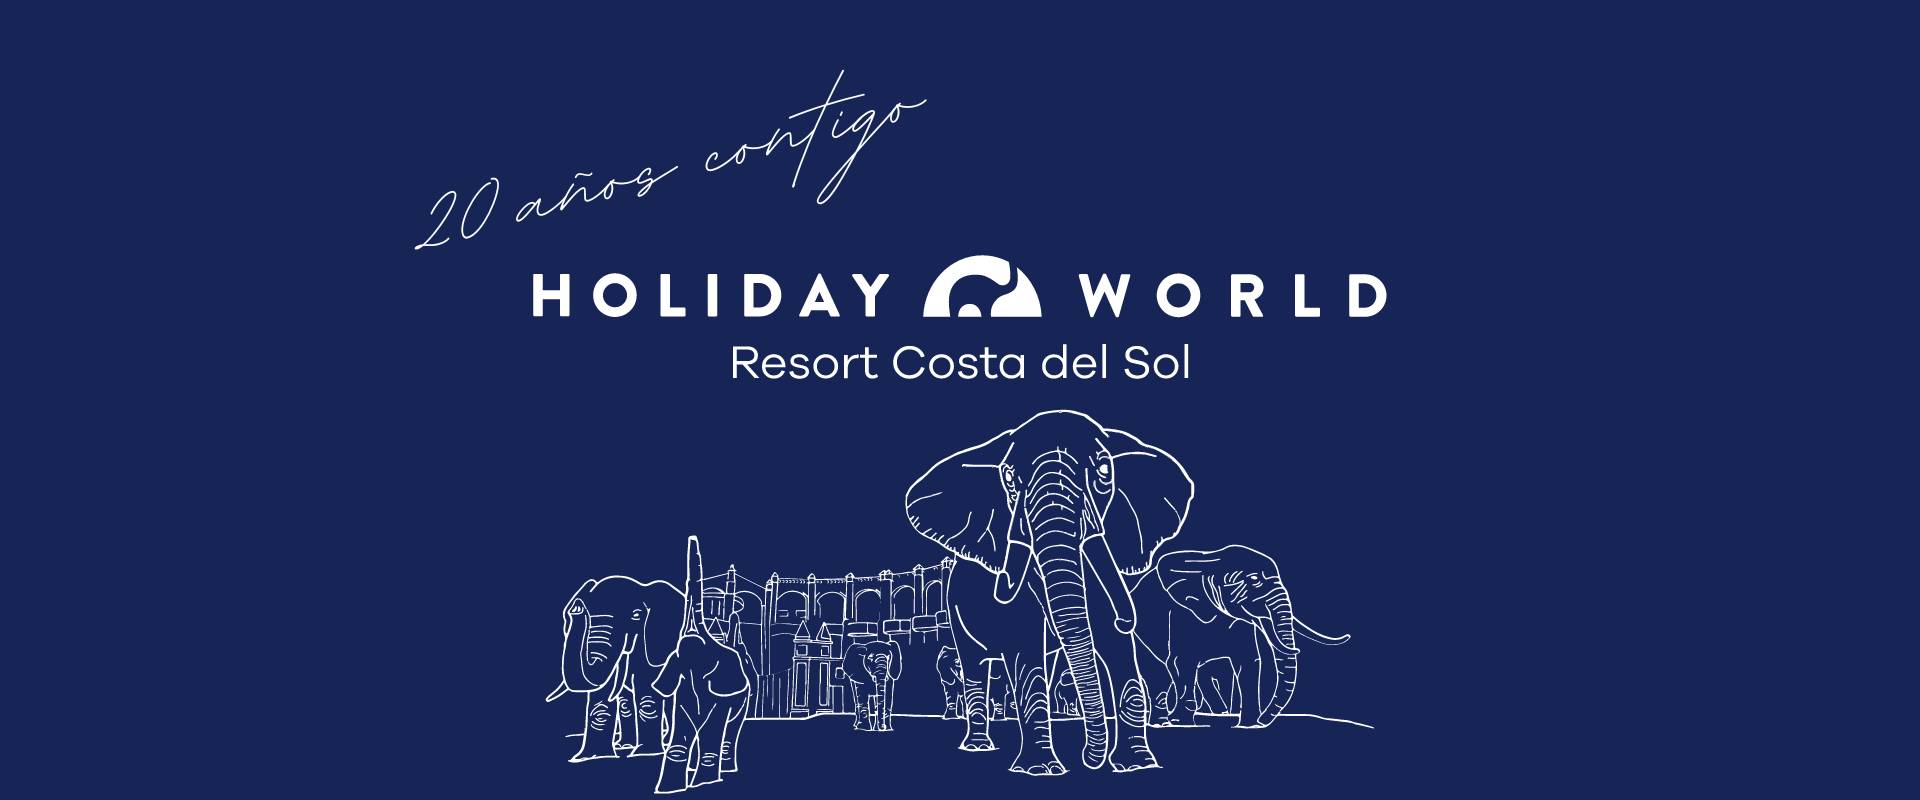 We turn 20 years old Holiday World Resort